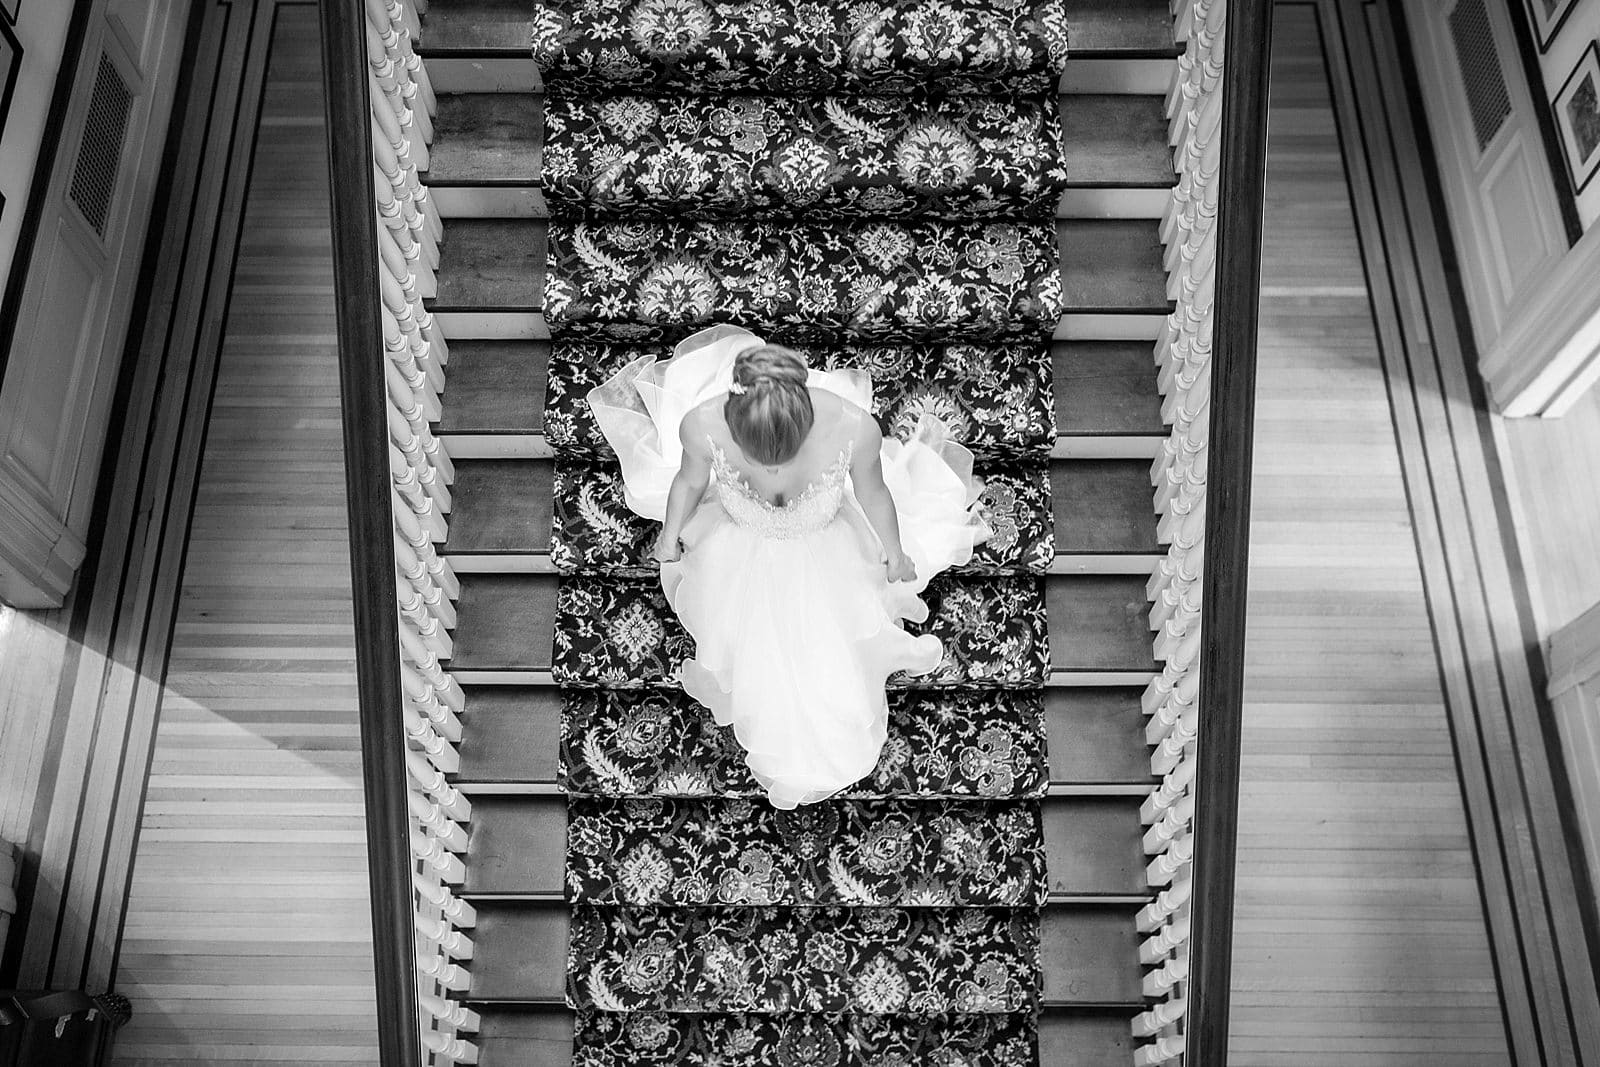 Black and white bridal portrait, bride walking down staircase, portrait from above, Glen Foerd Mansion wedding